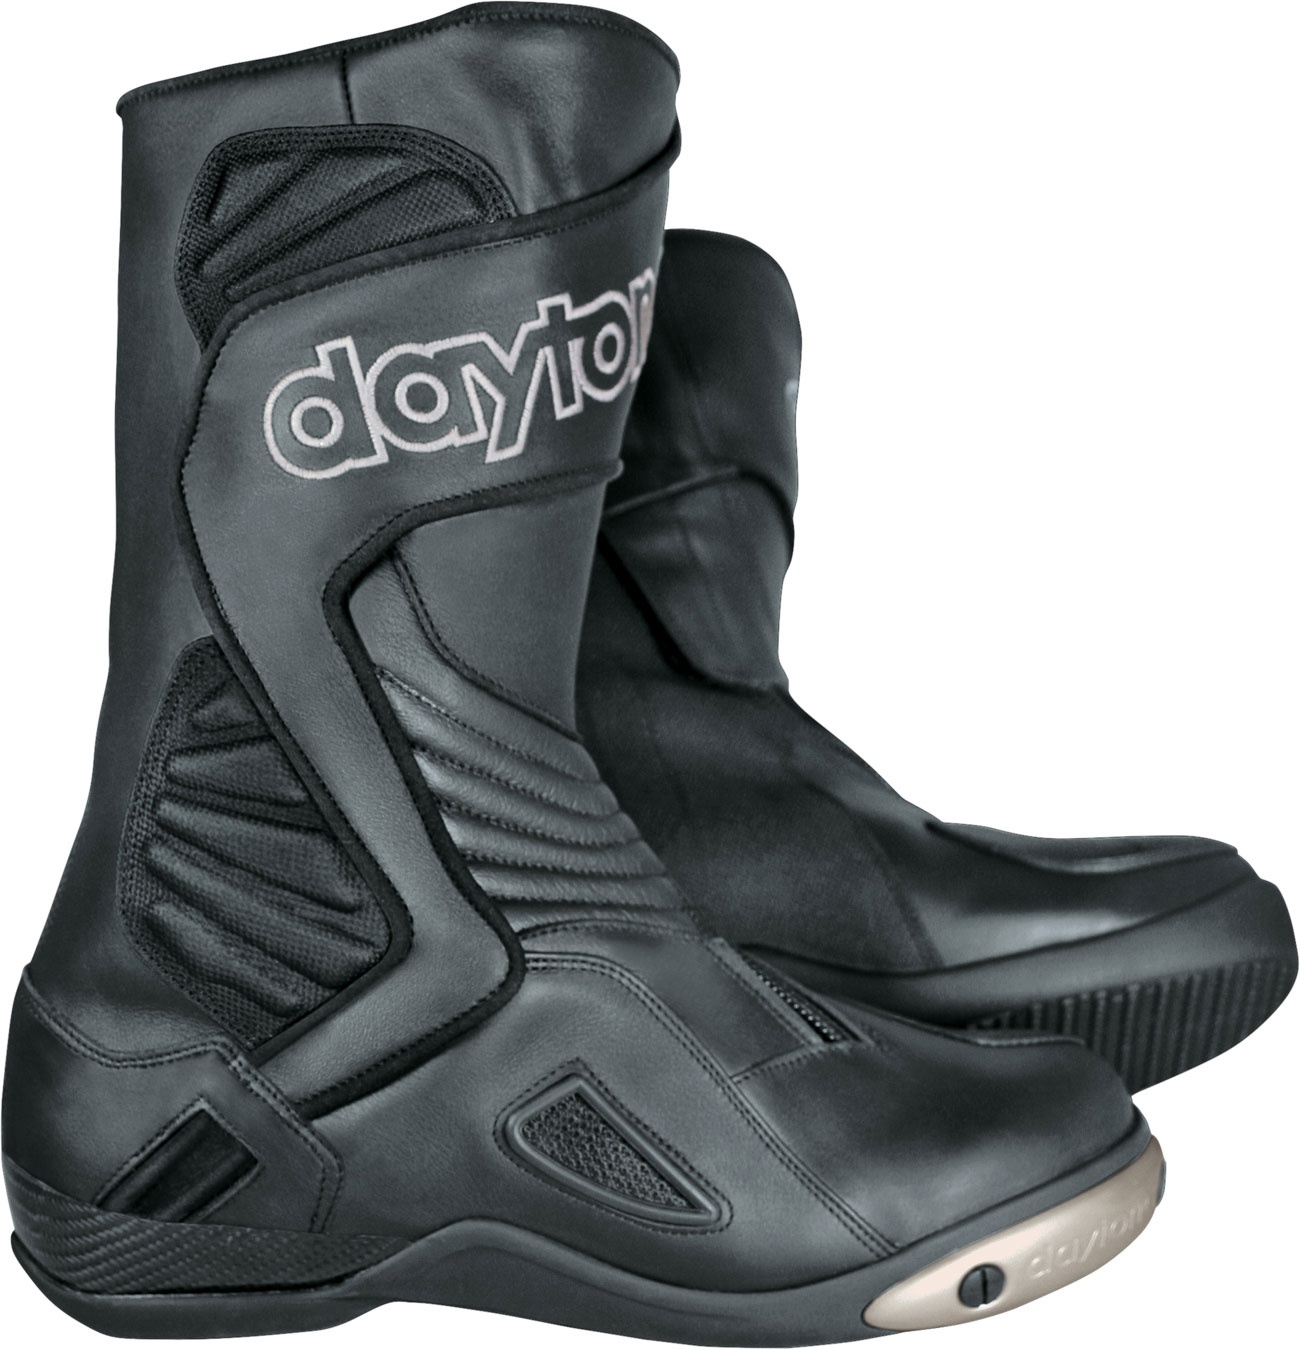 Daytona outer boots for EVO VOLTEX - Noir - 36